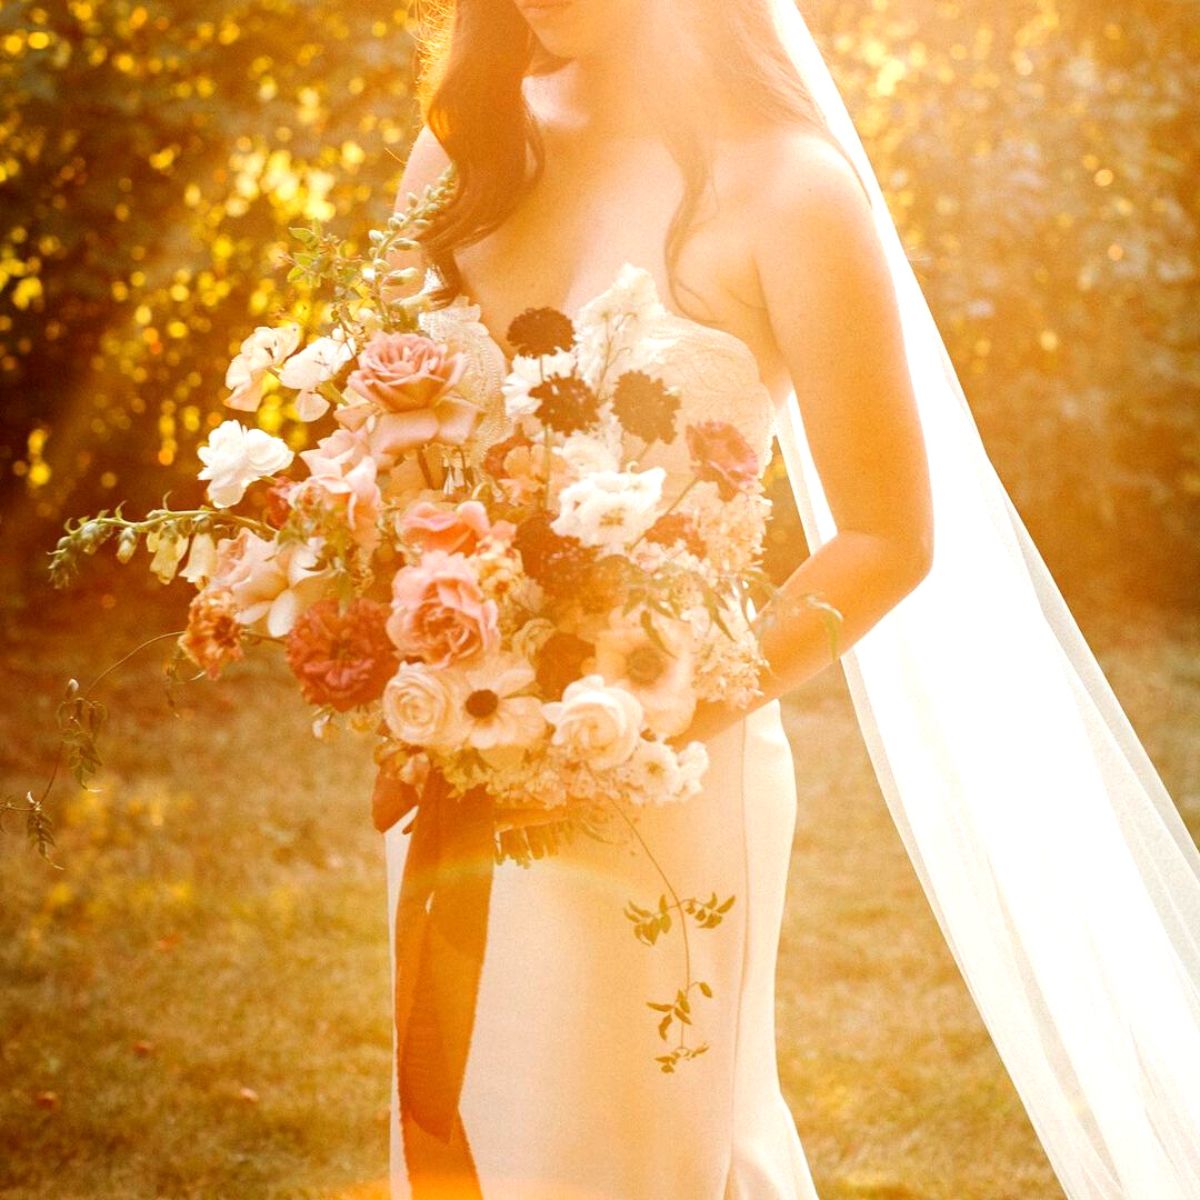 Rays of sun illuminating wedding bouquet